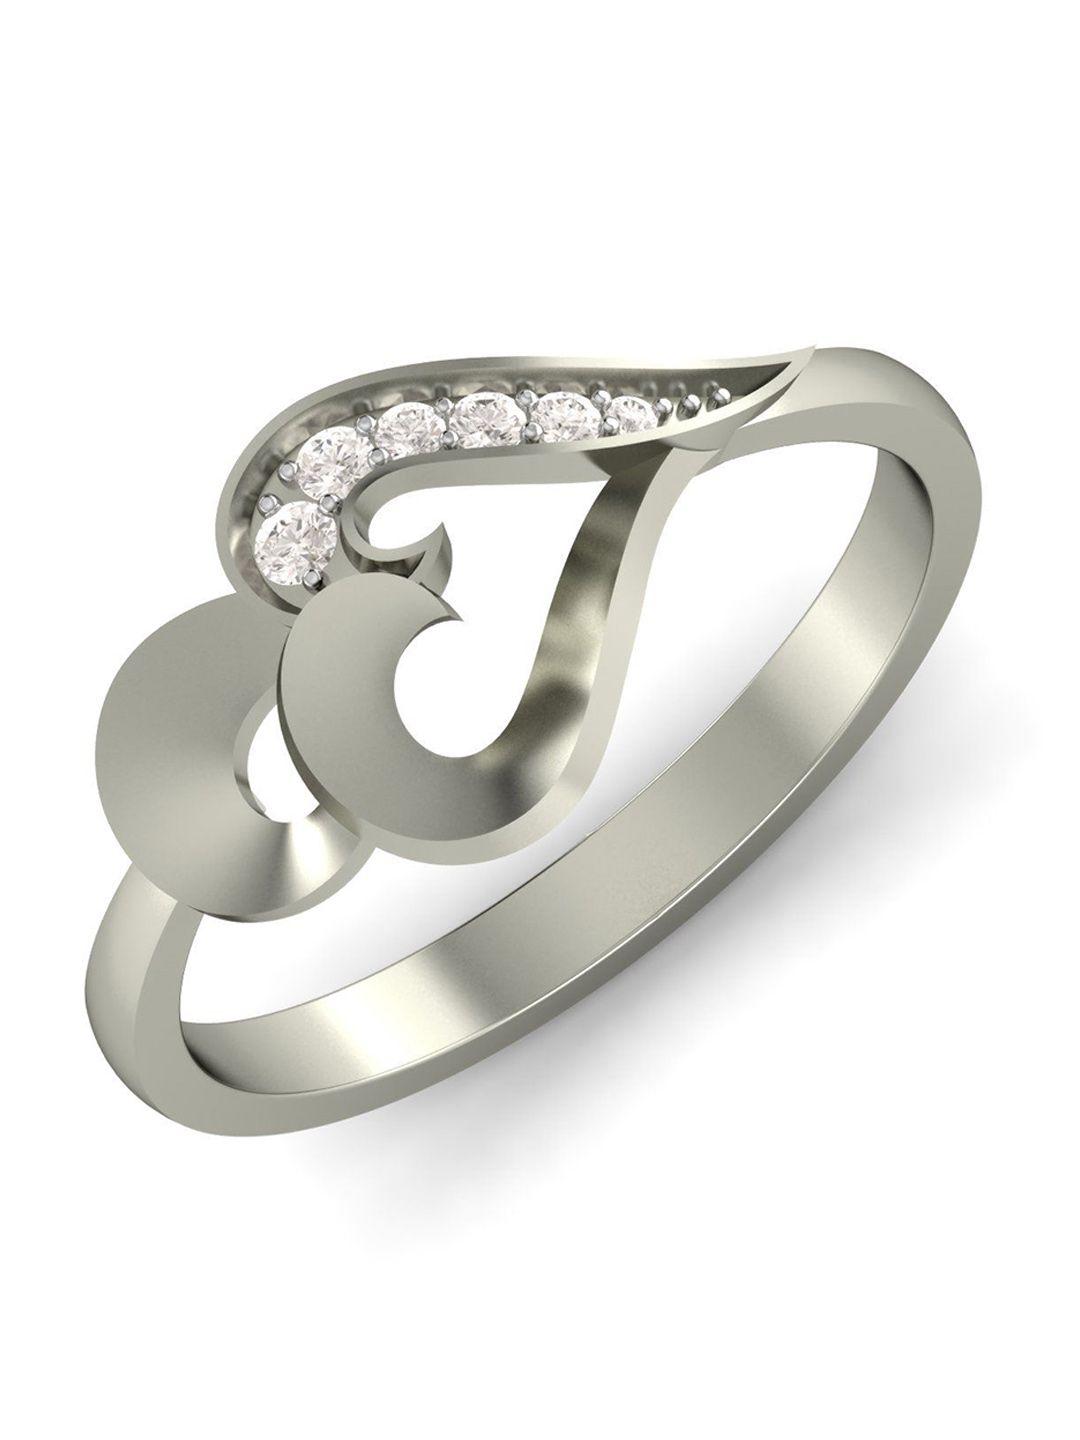 kuberbox-catchy-trio18kt-white-gold-diamond-studded-ring-2.34-gm